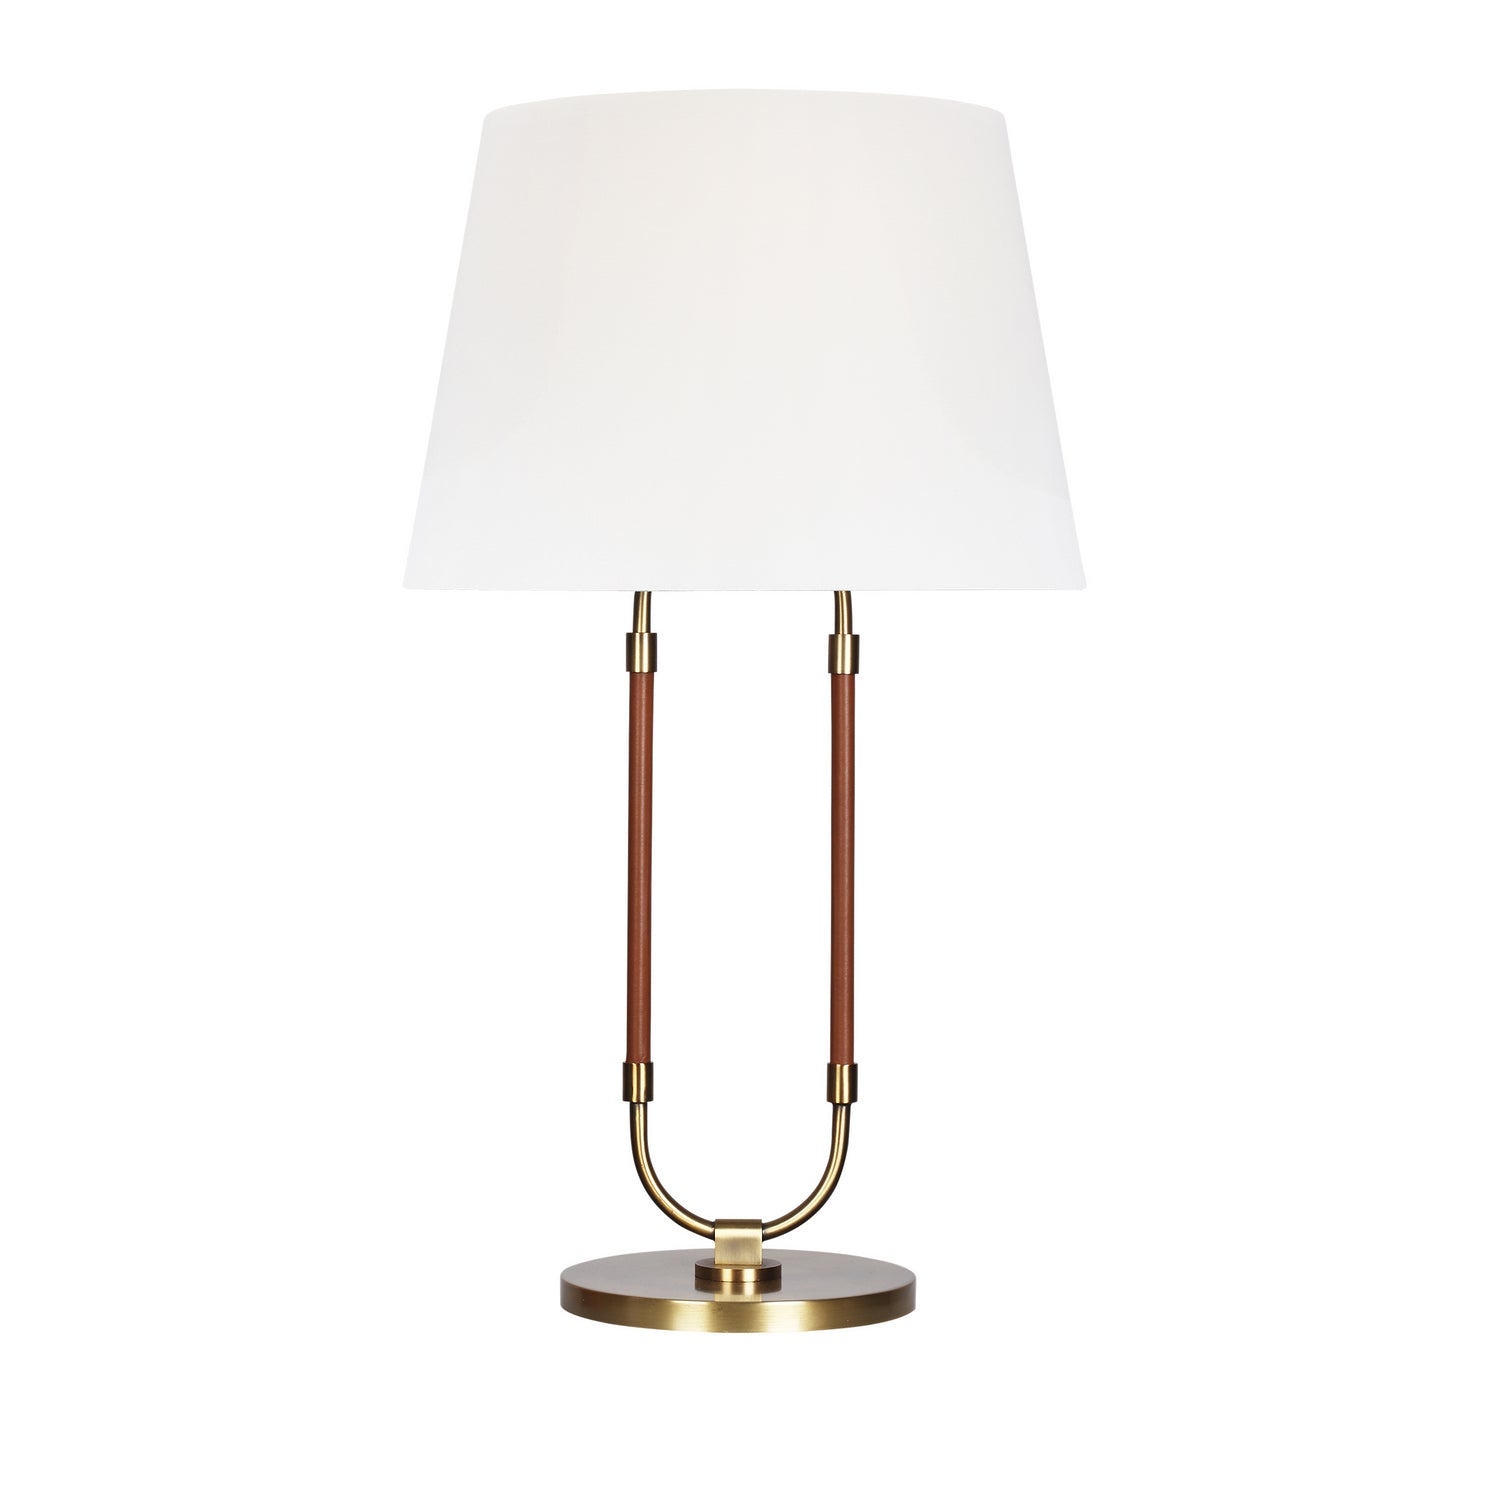 Visual Comfort Studio Canada - One Light Table Lamp - Katie - Time Worn Brass- Union Lighting Luminaires Decor